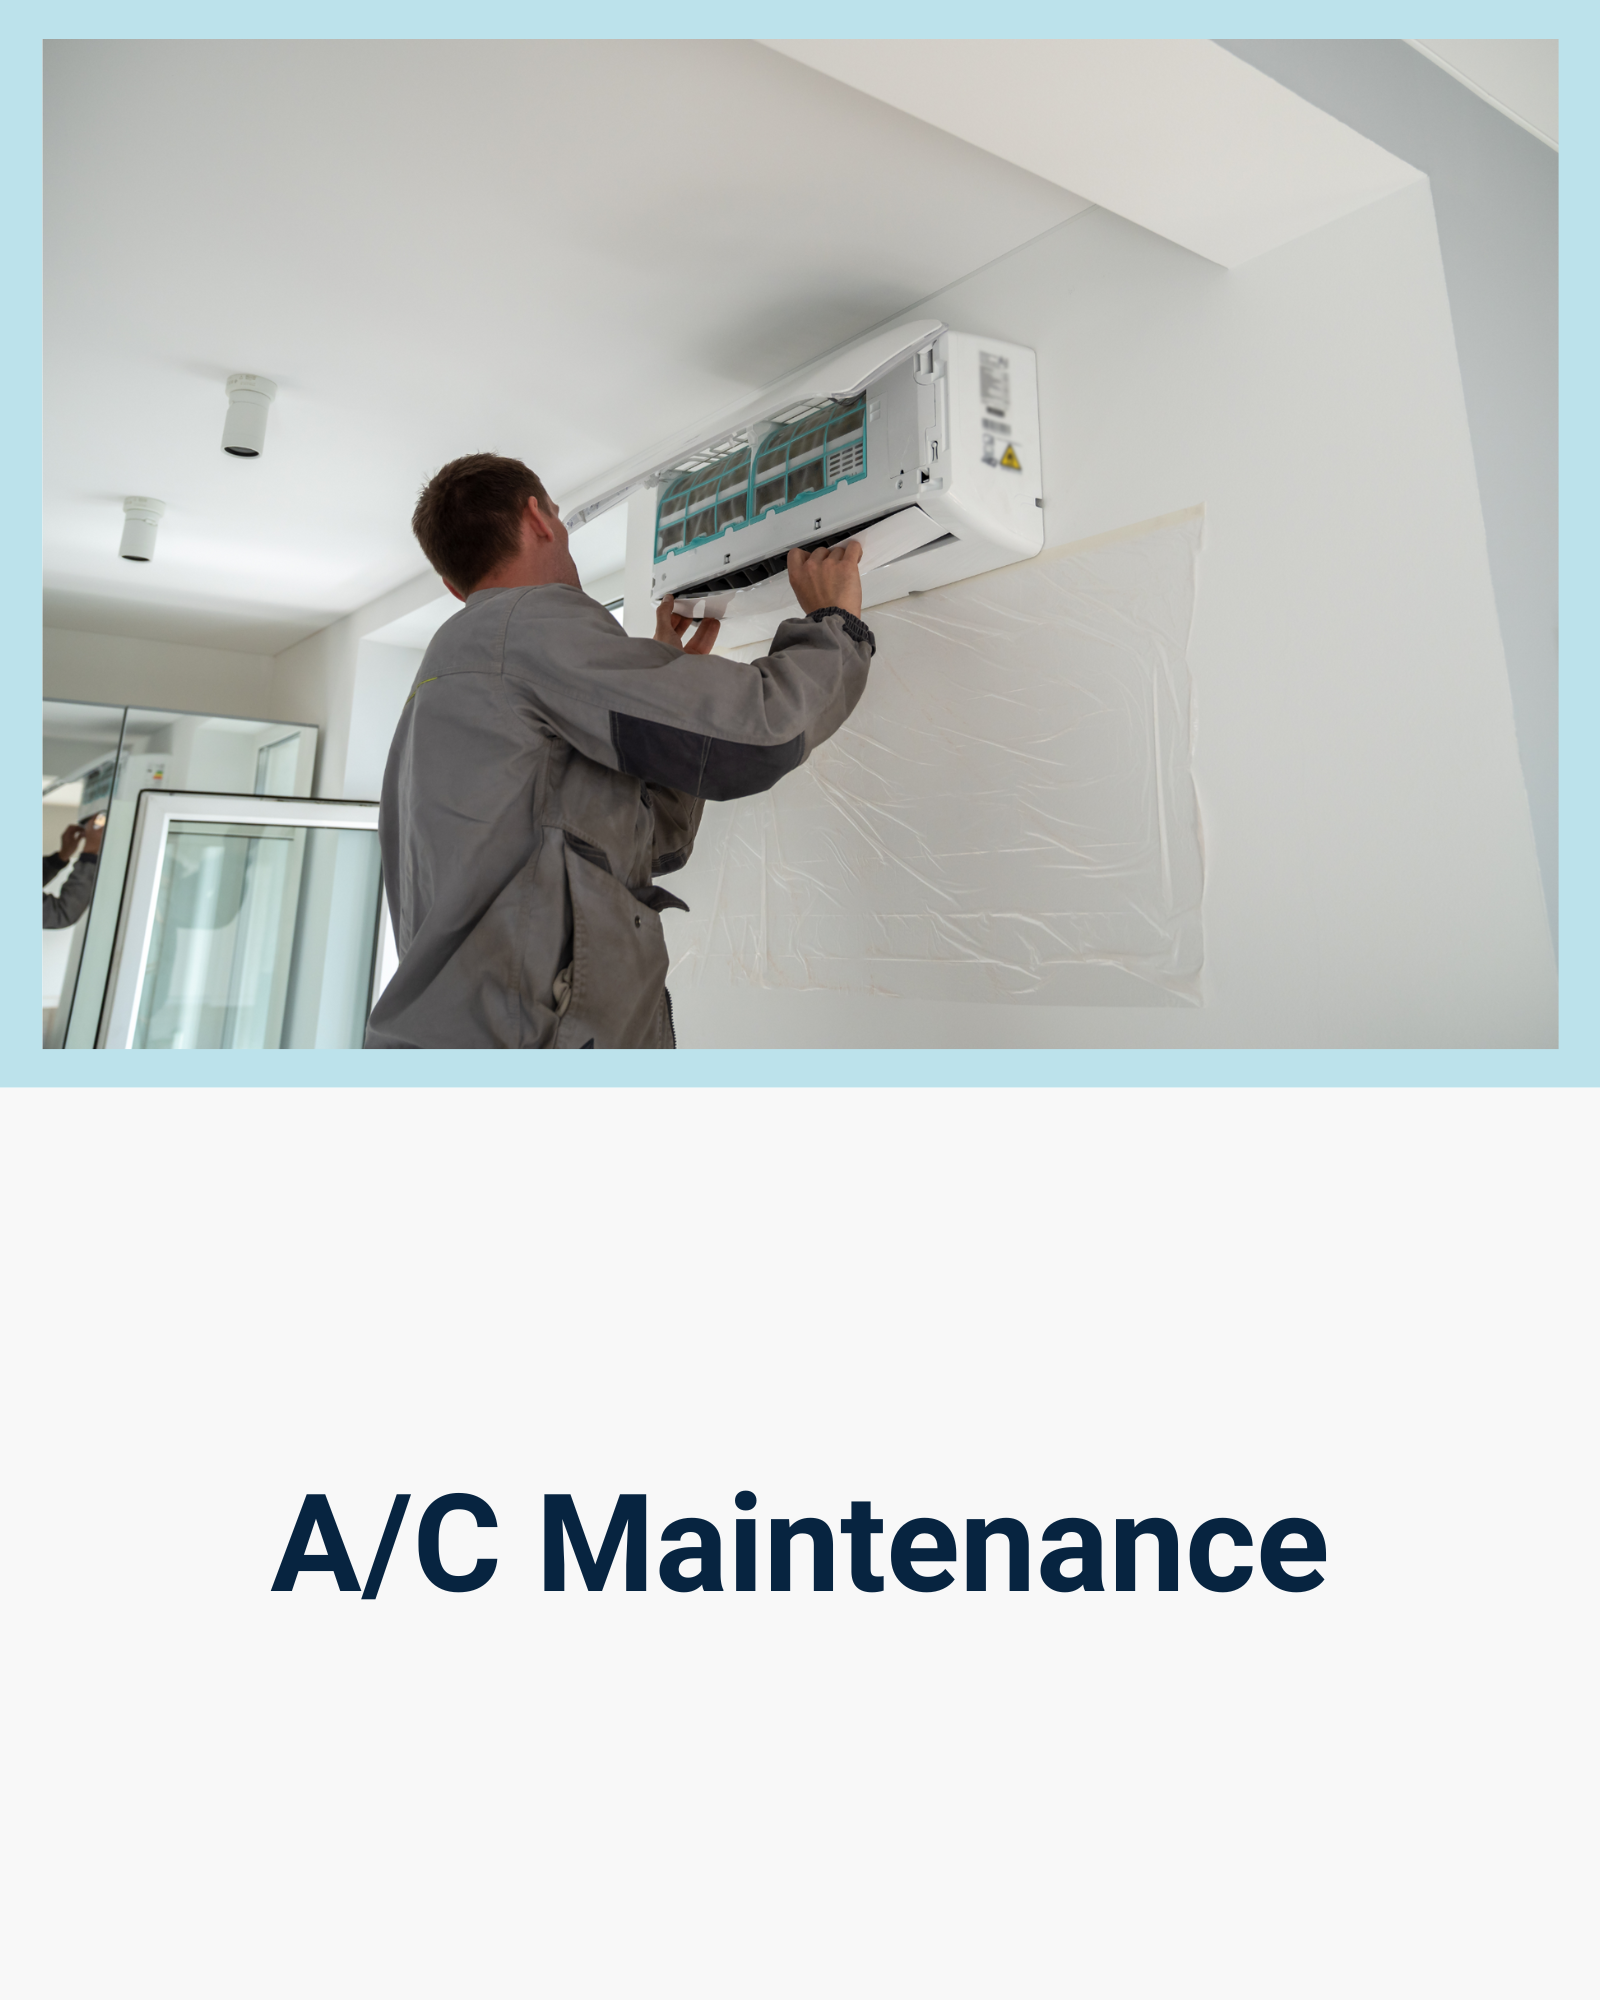 A/C Maintenance